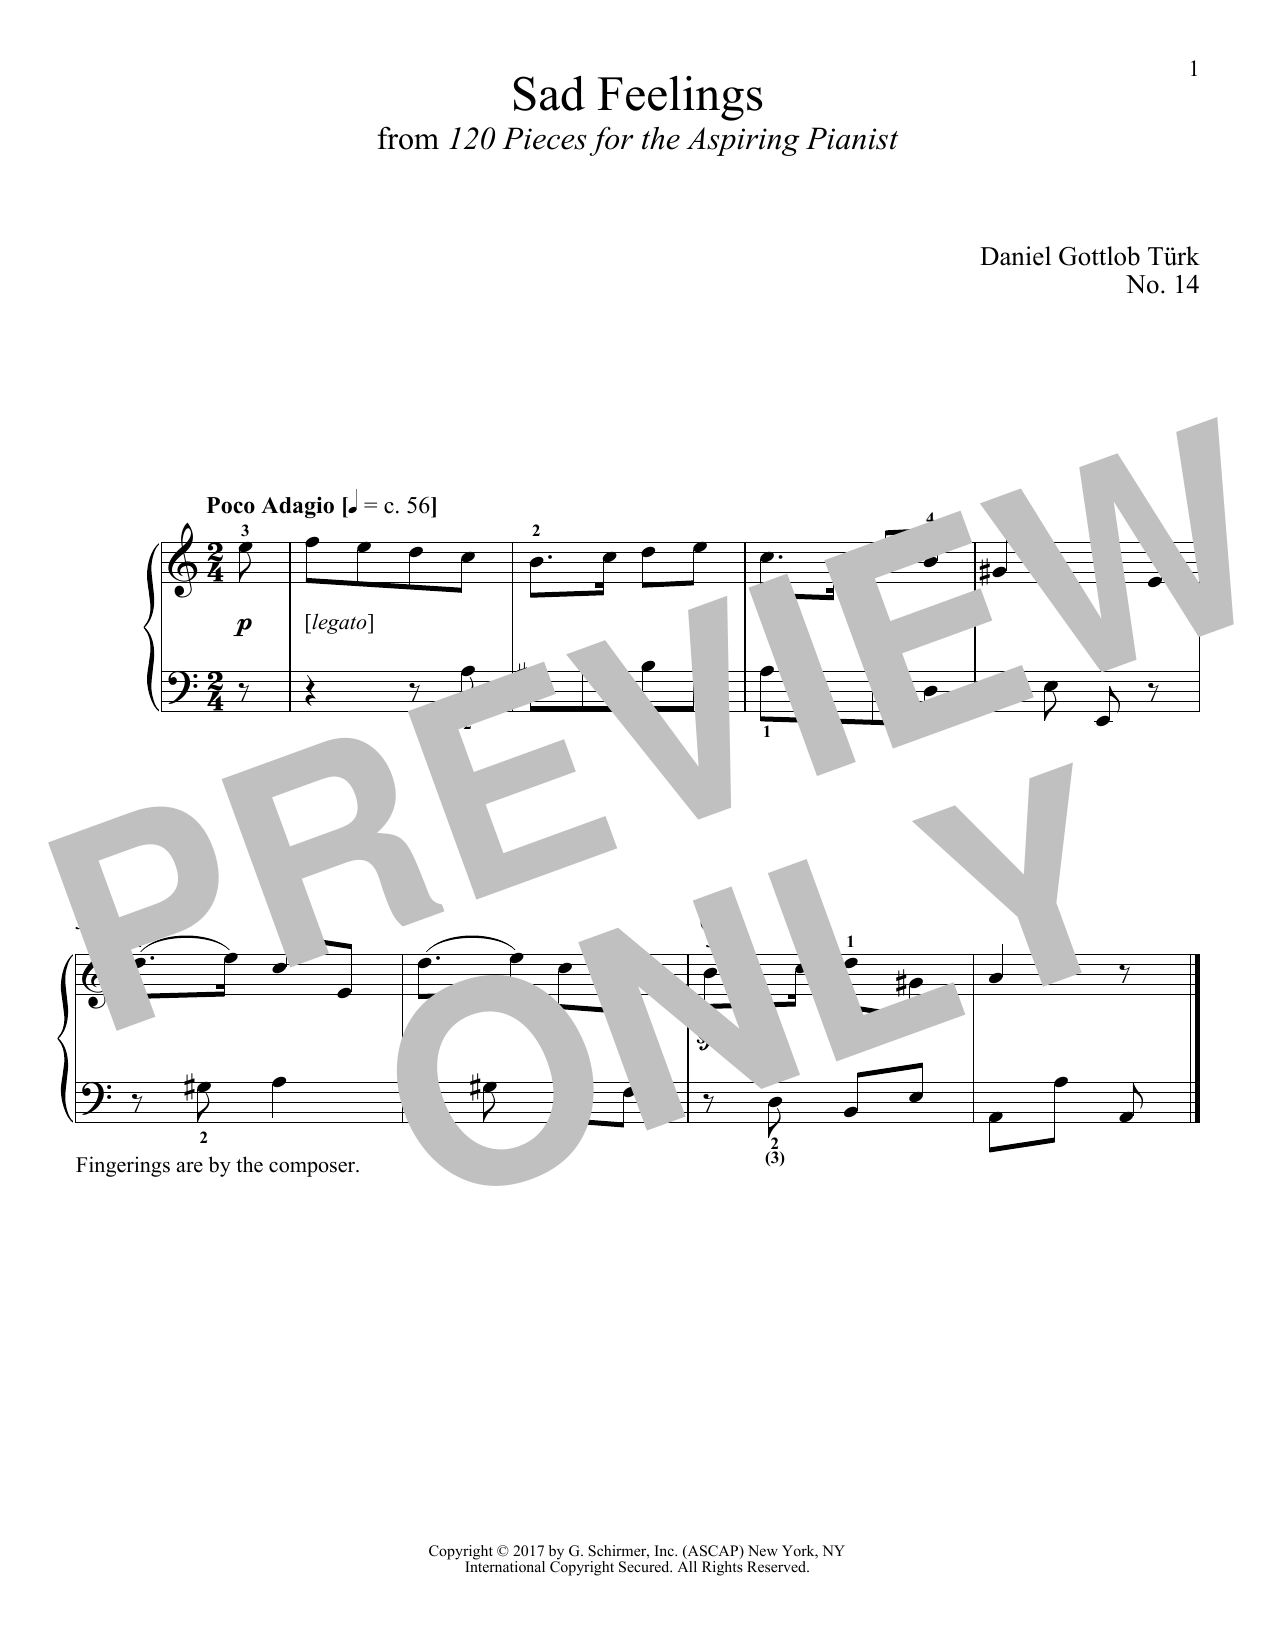 Daniel Gottlob Türk Sad Feelings Sheet Music Notes & Chords for Piano - Download or Print PDF